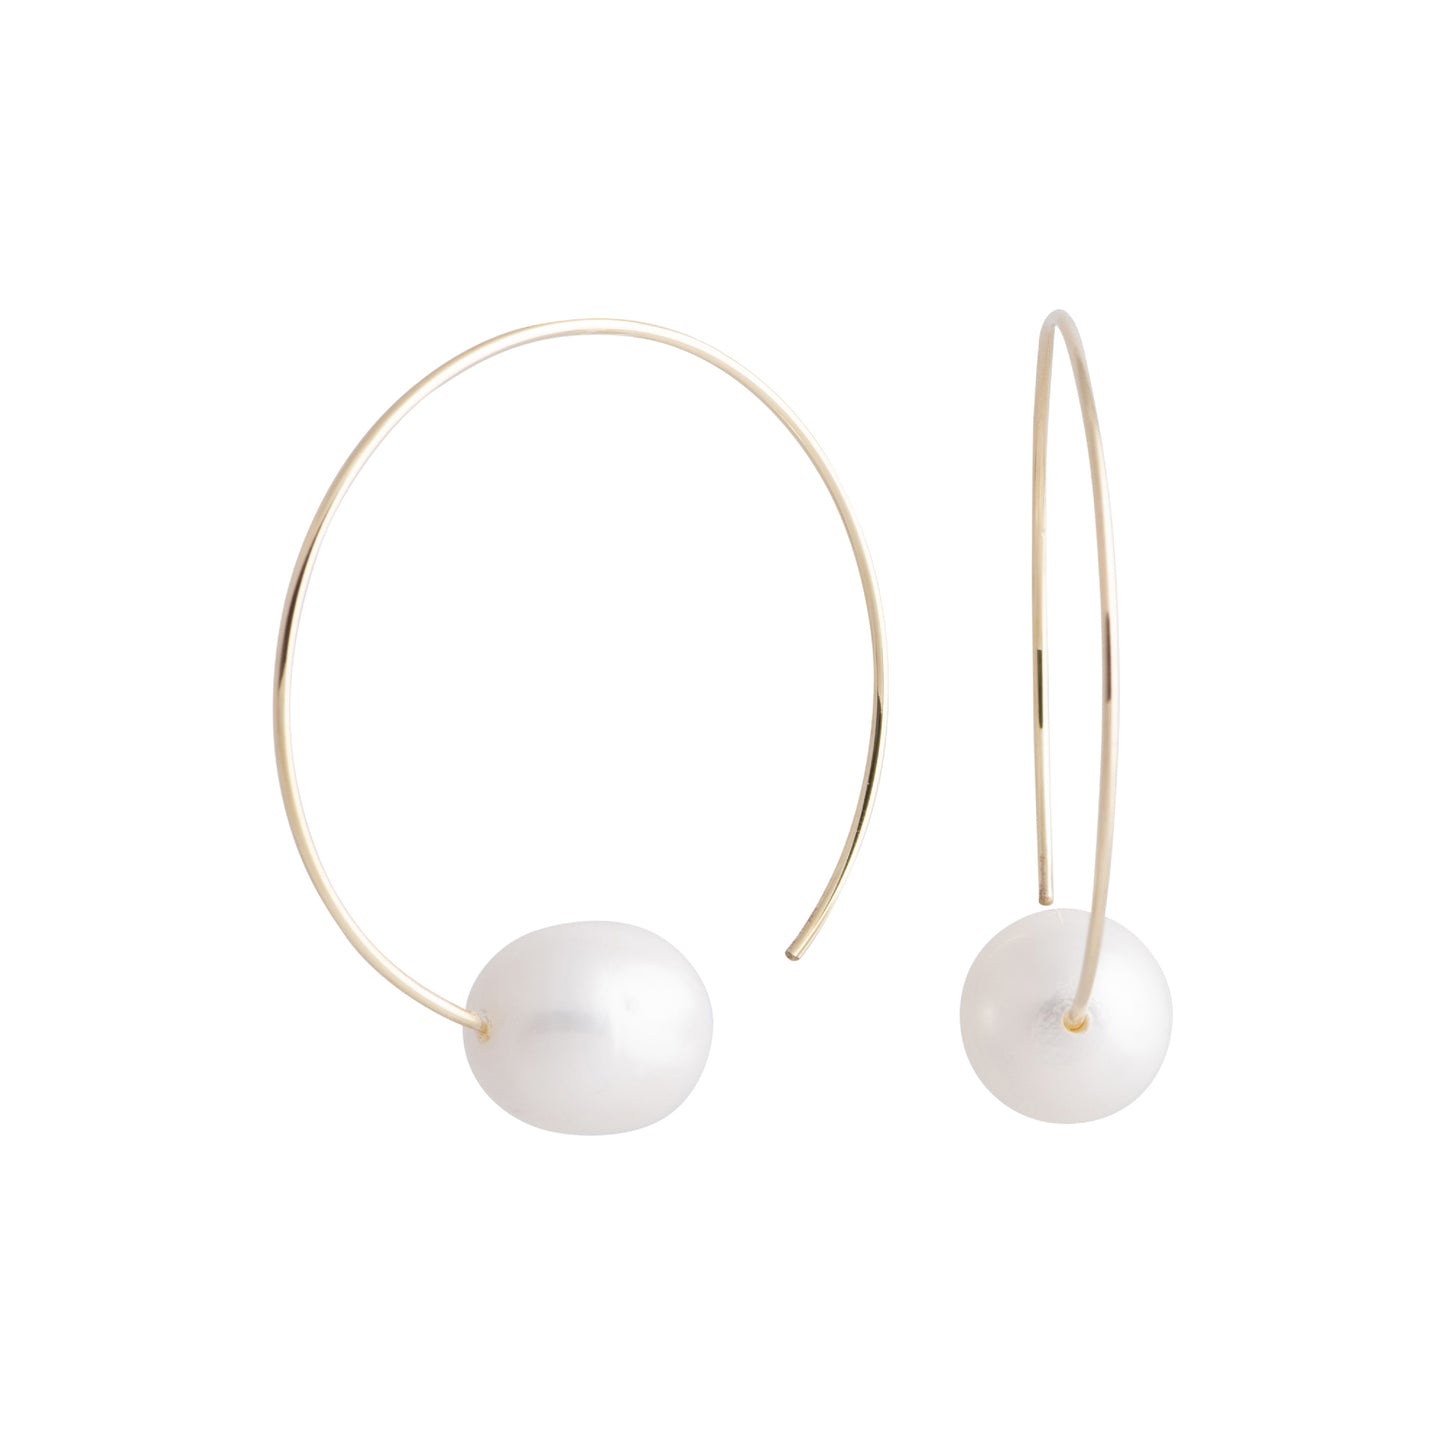 Kiana - Gold hoop with pearl earrings (White pearls)